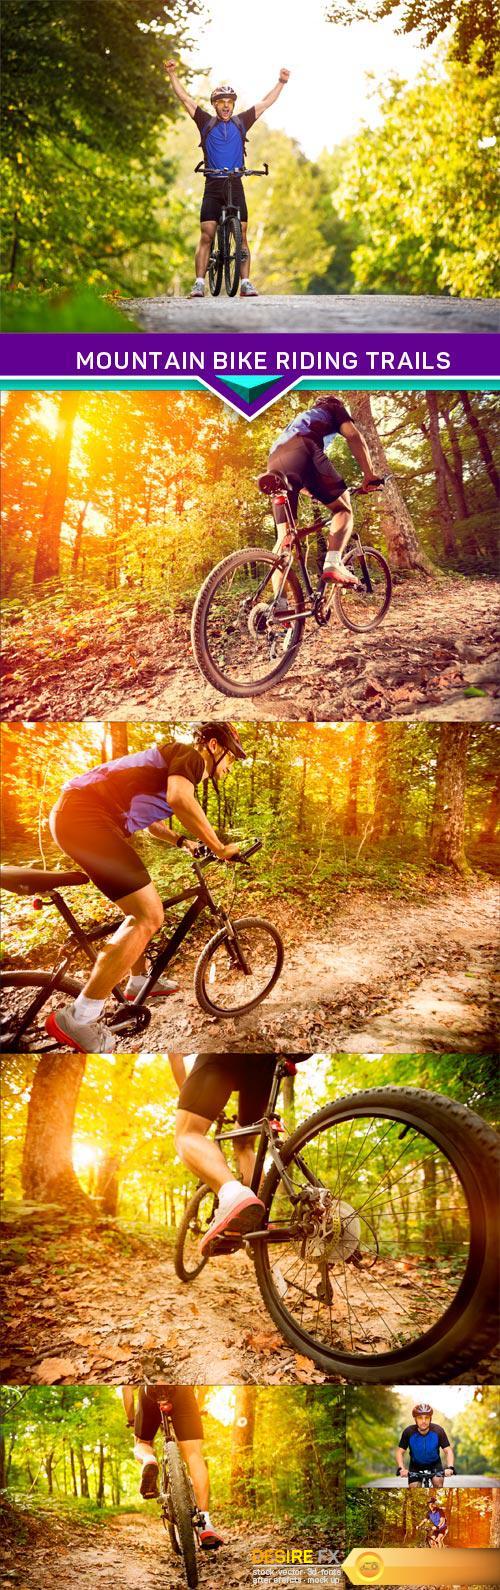 Mountain bike riding trails 7X JPEG